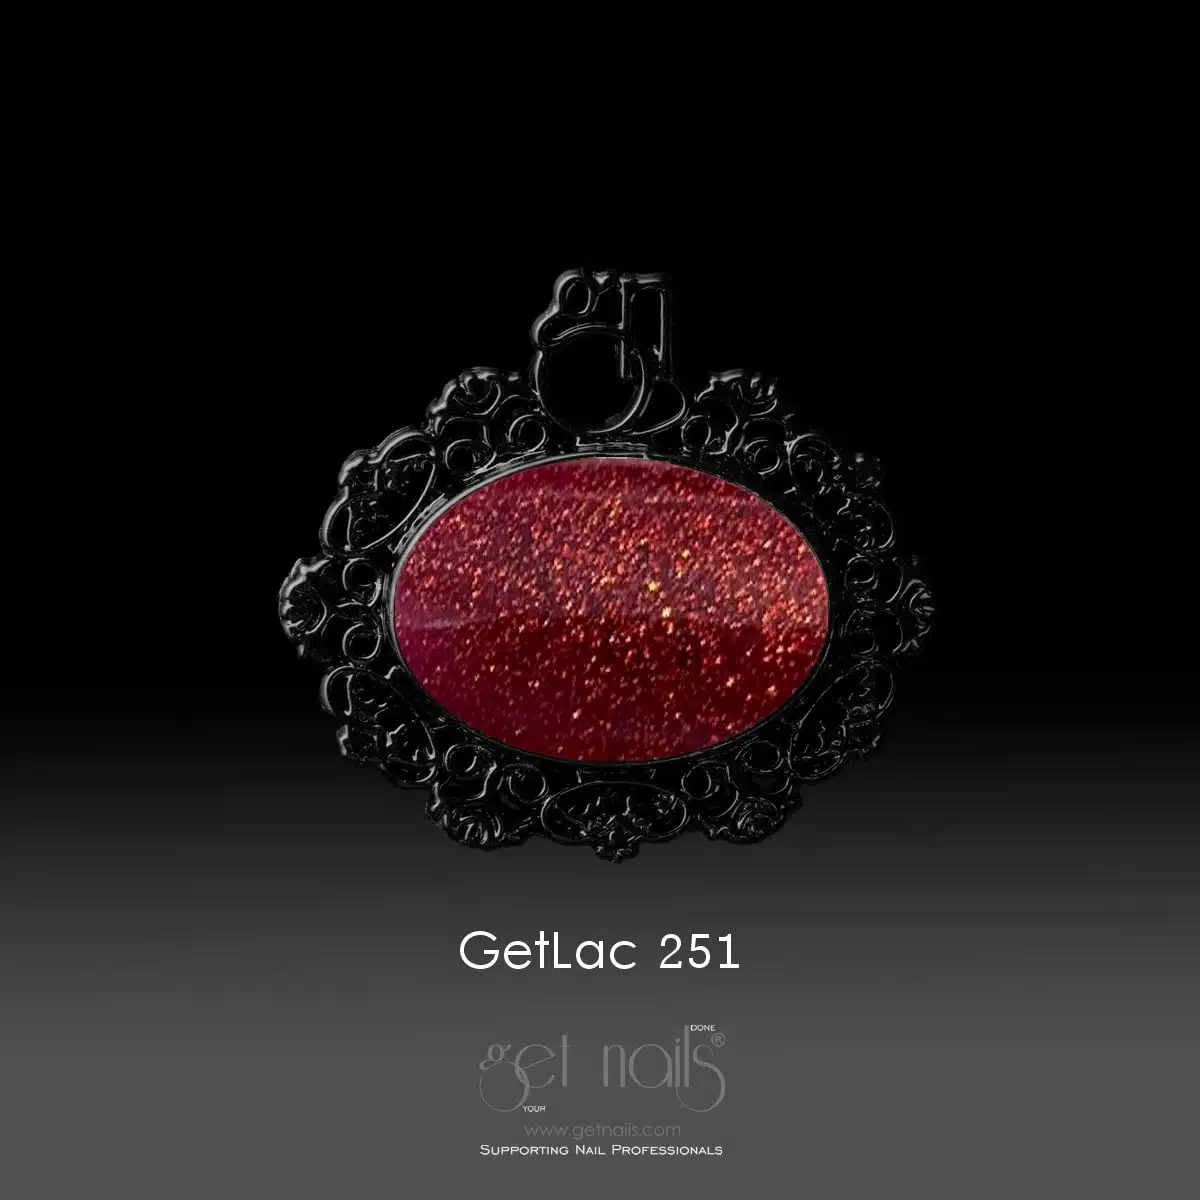 Get Nails Austria - GetLac 251 15 g